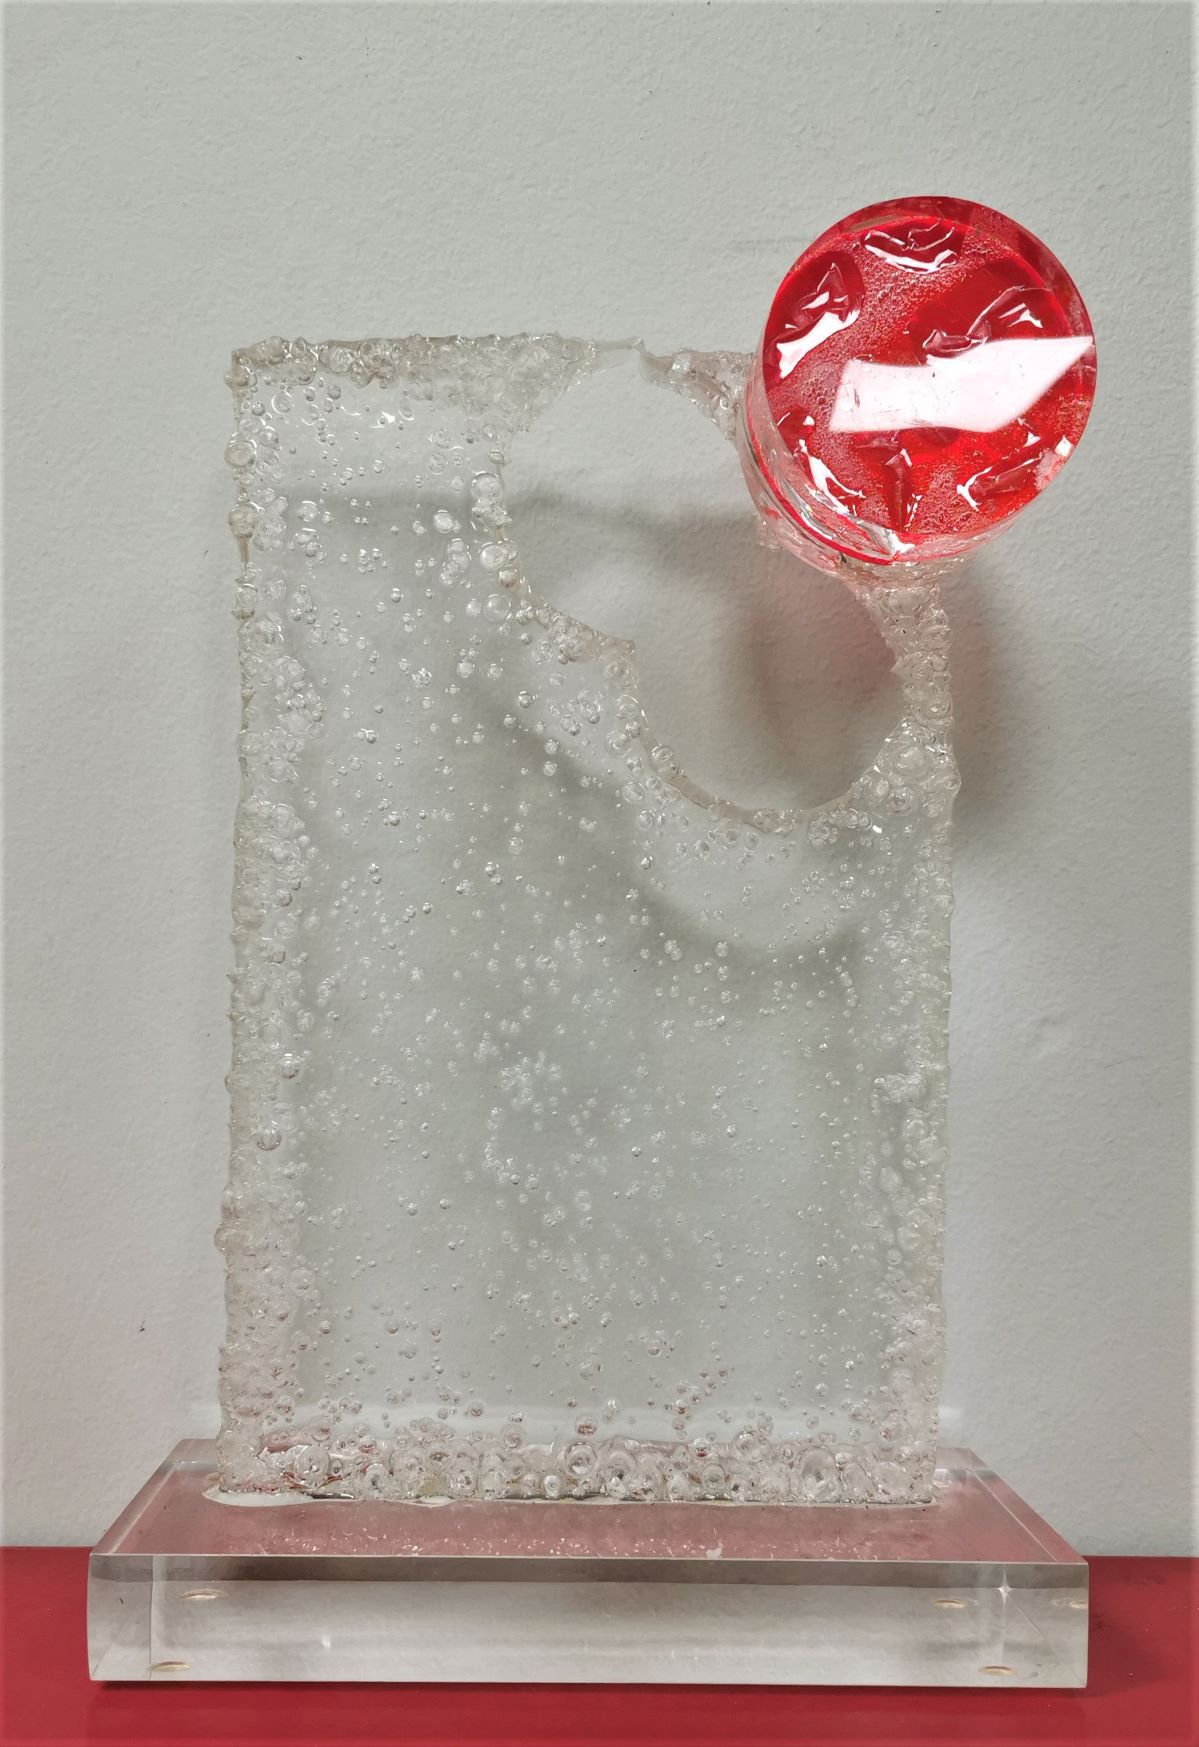 Cristina MARQUES Luna roja - 2013 (coll. Space oddity)

Plástico 28 x 8 x 18 cm